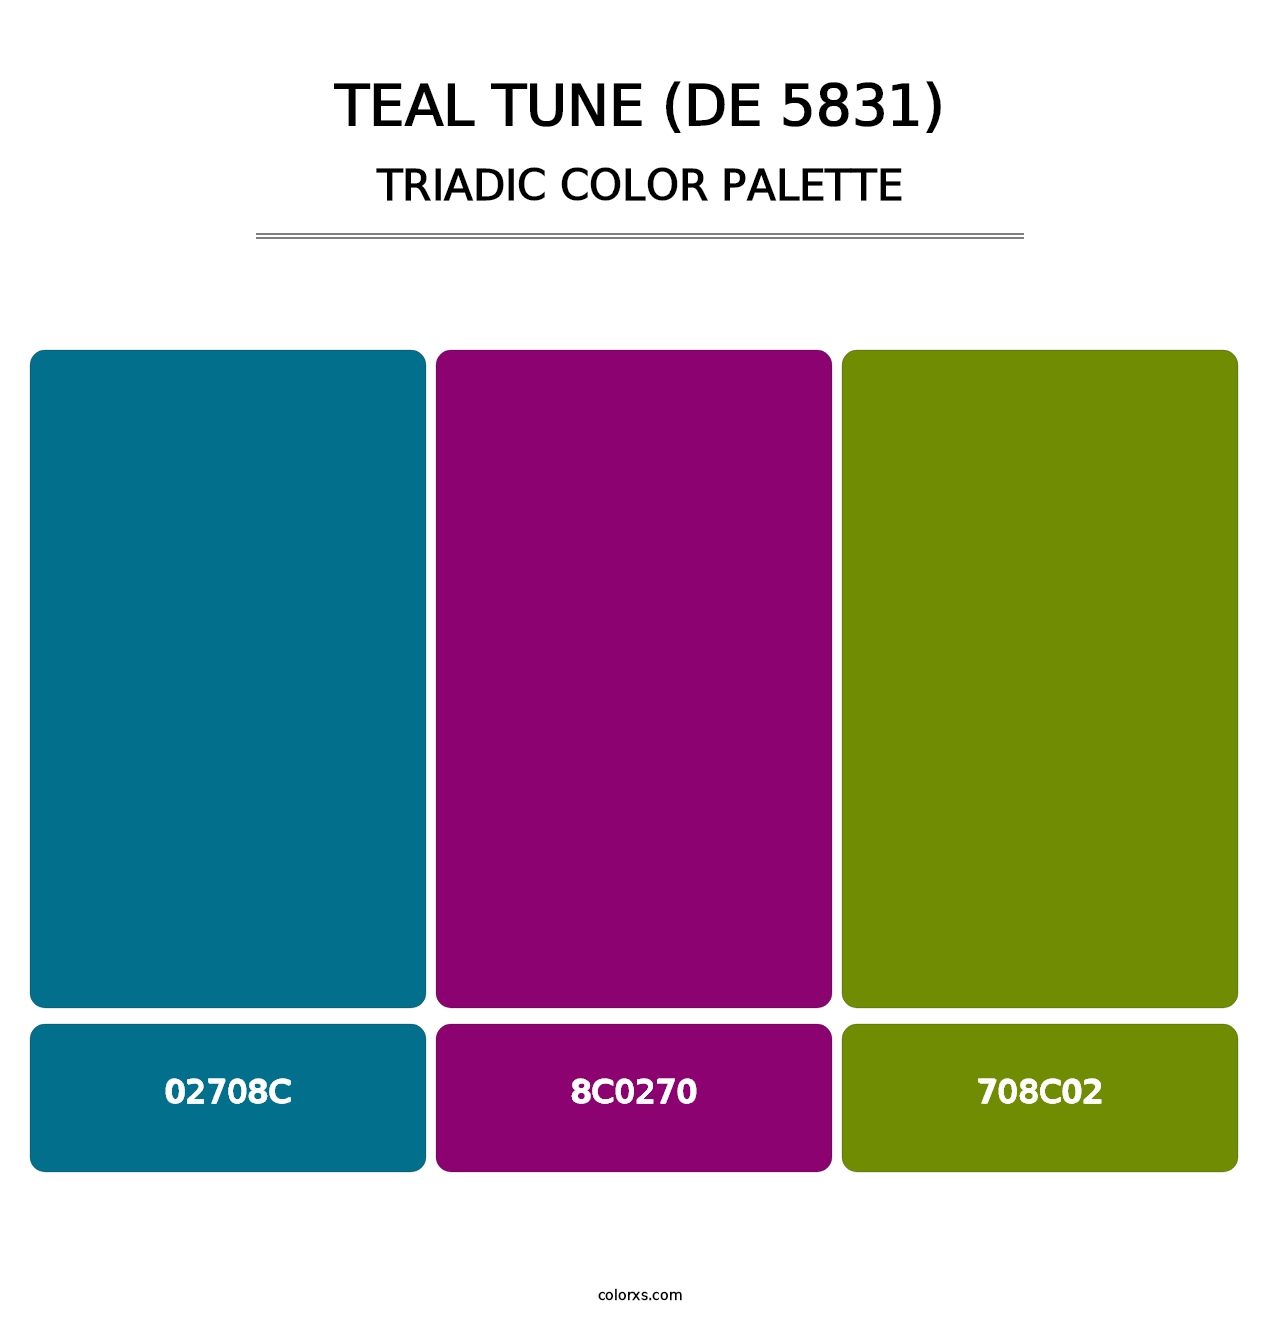 Teal Tune (DE 5831) - Triadic Color Palette